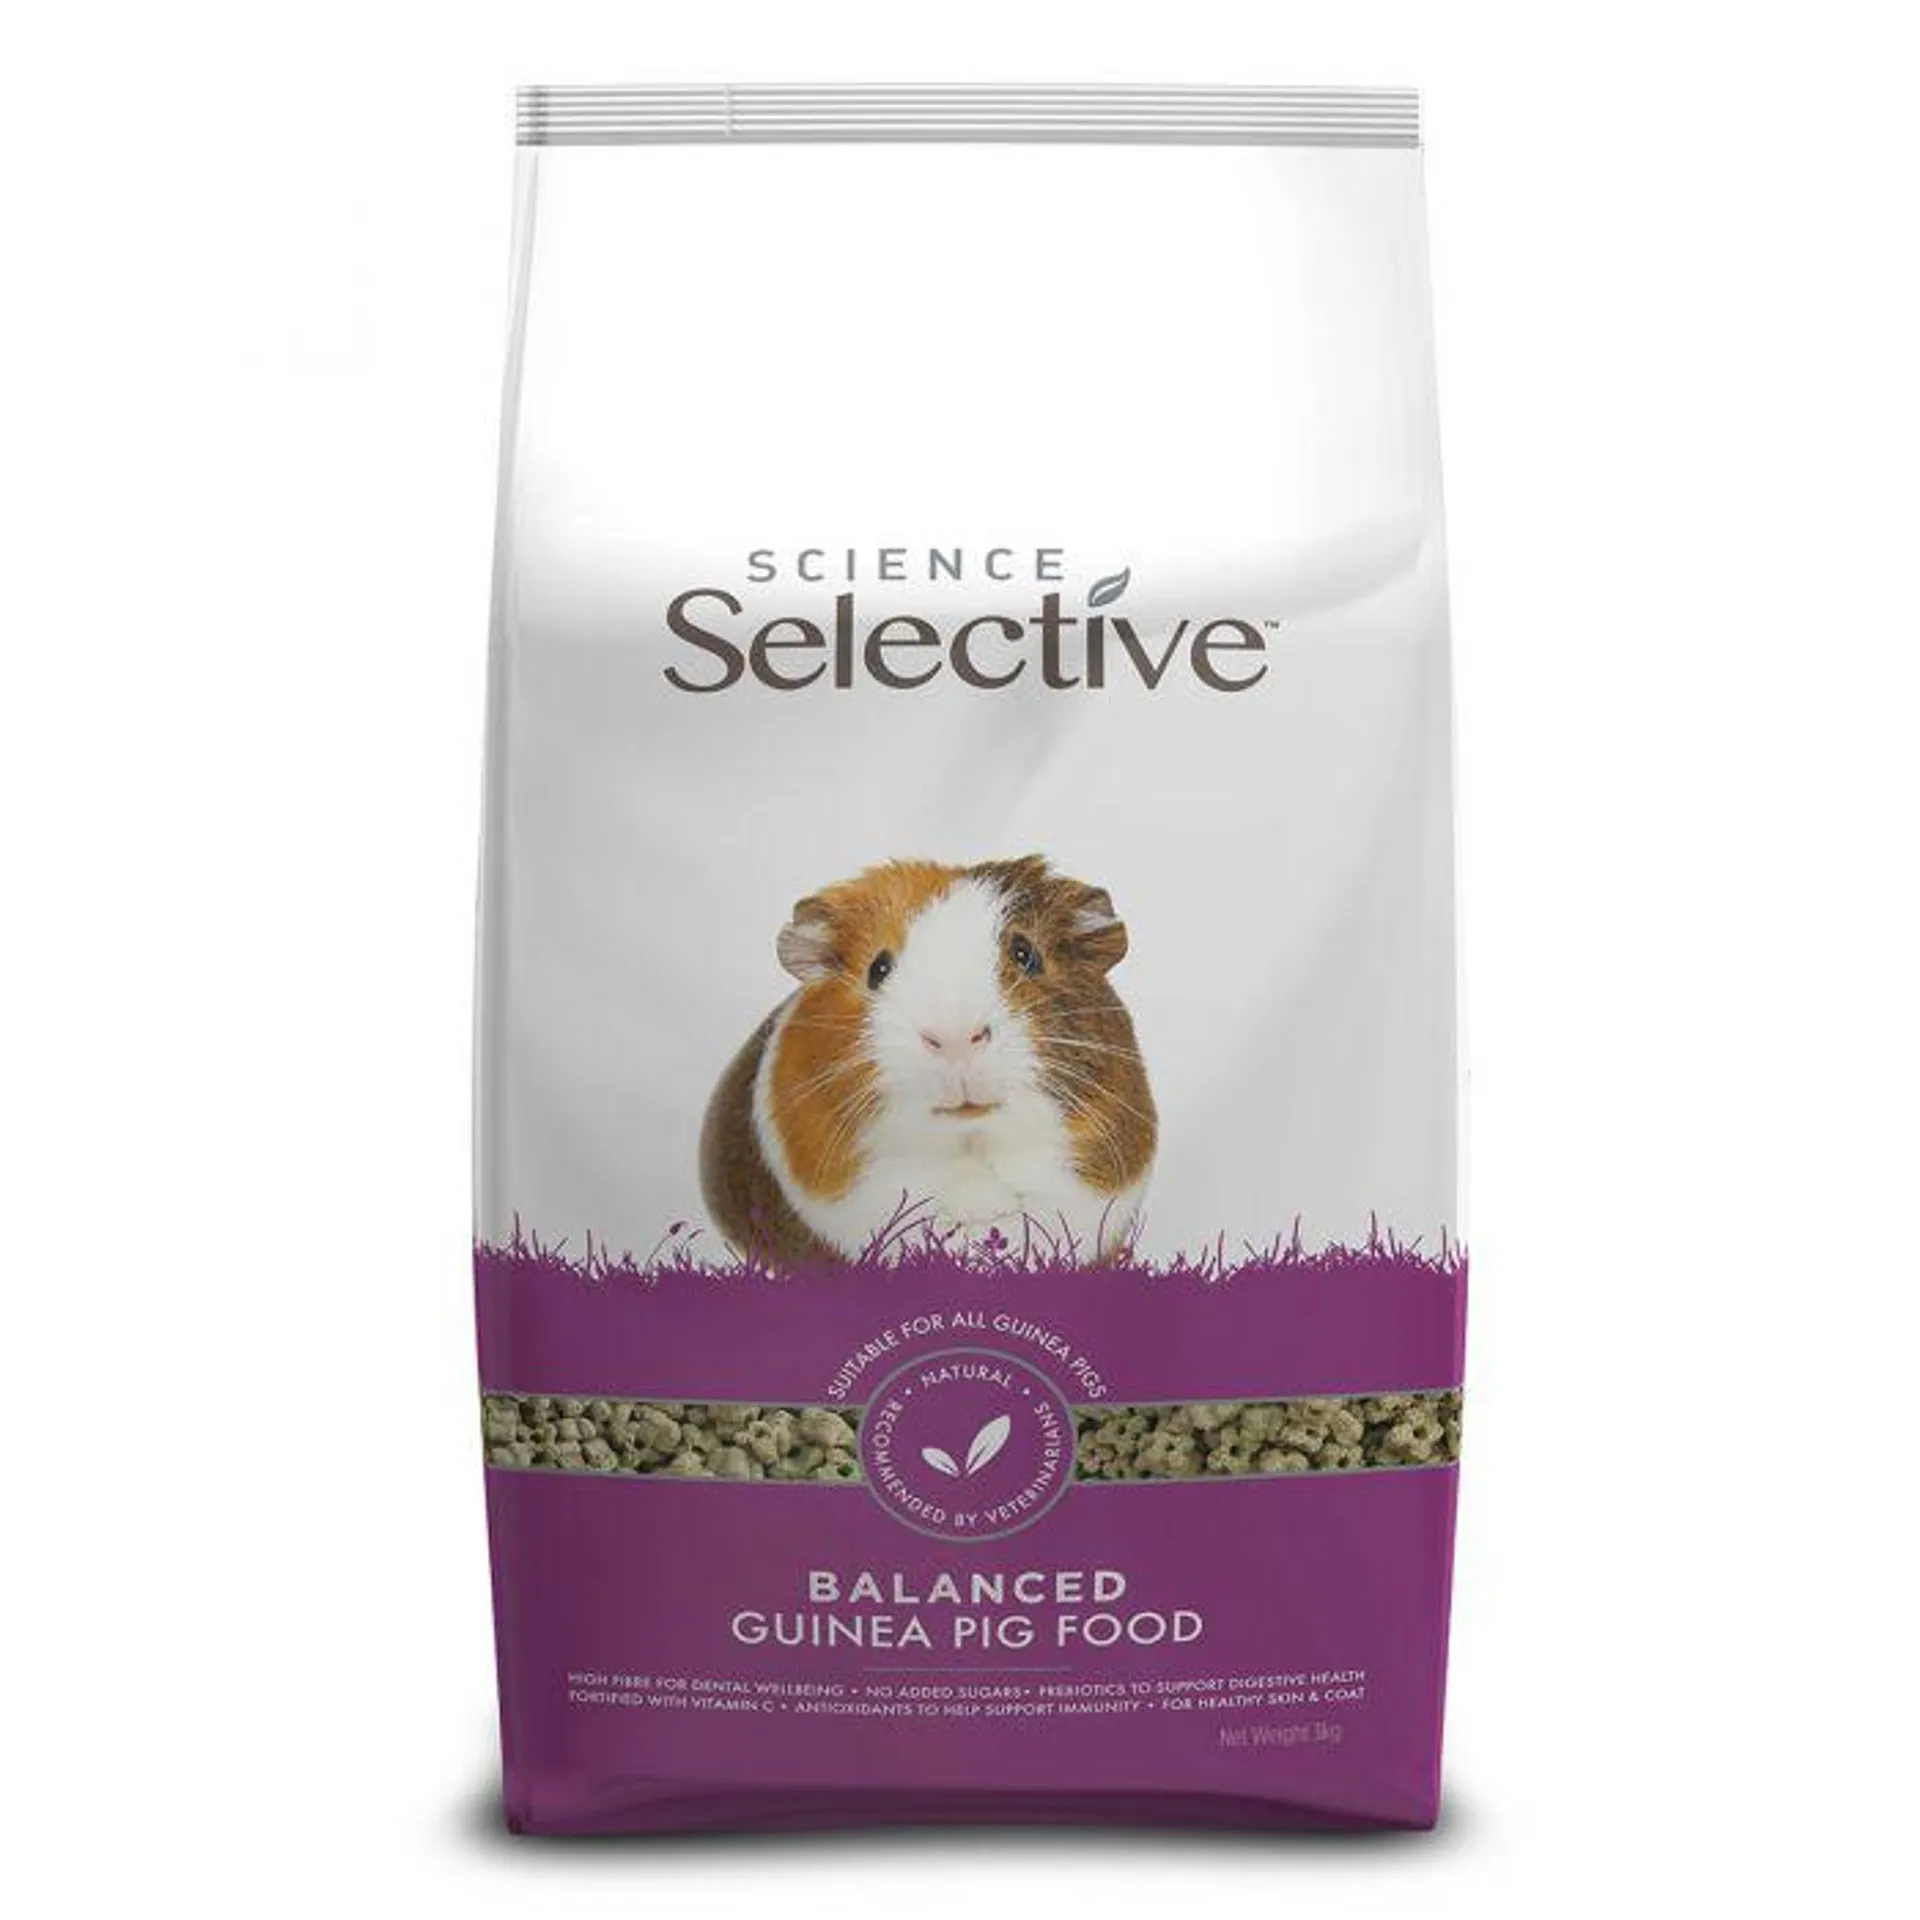 Science Selective Guinea Pig Food - 3Kg